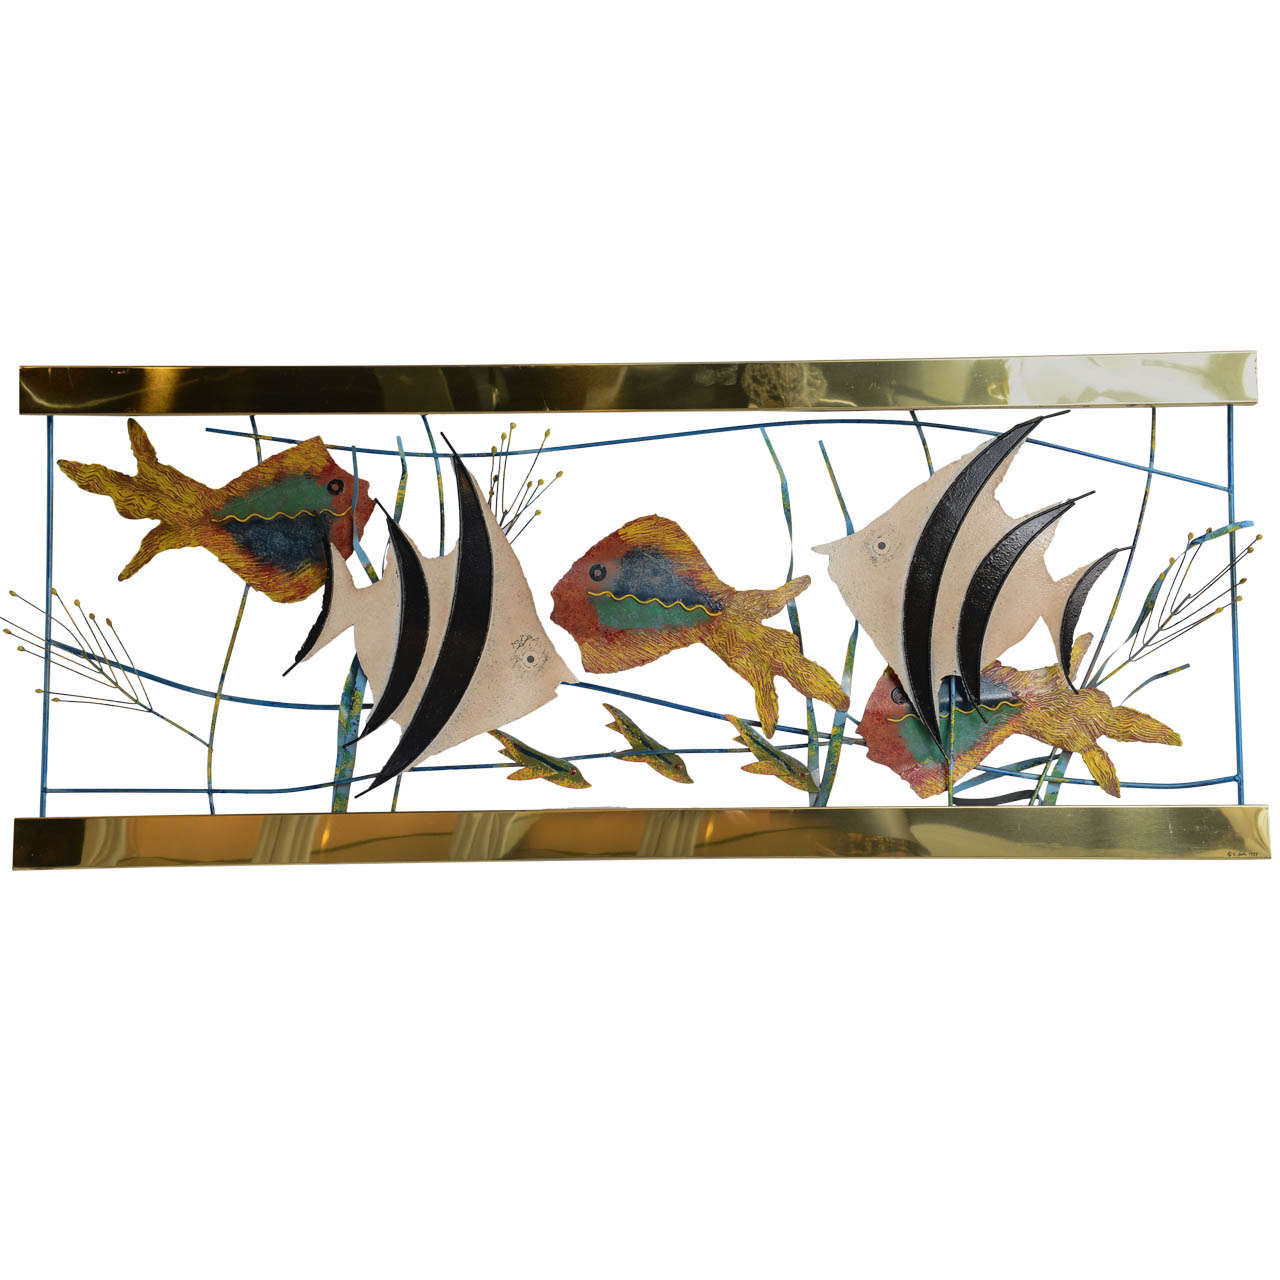 Tropical Fish in Aquarium, Metal Wall Sculpture, Signed C. Jere